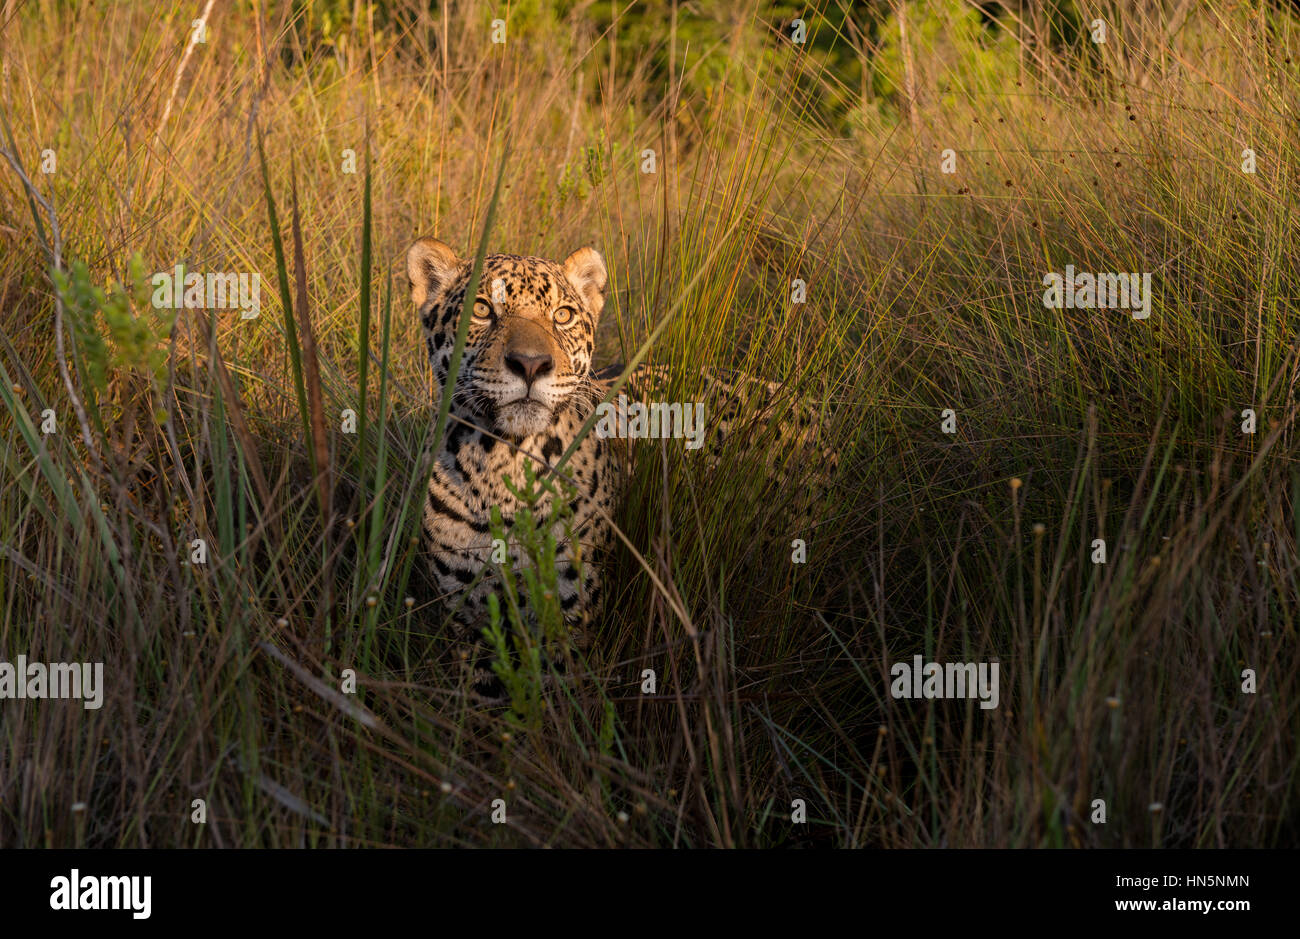 Jaguar among tall grasses in Central Brazil Stock Photo